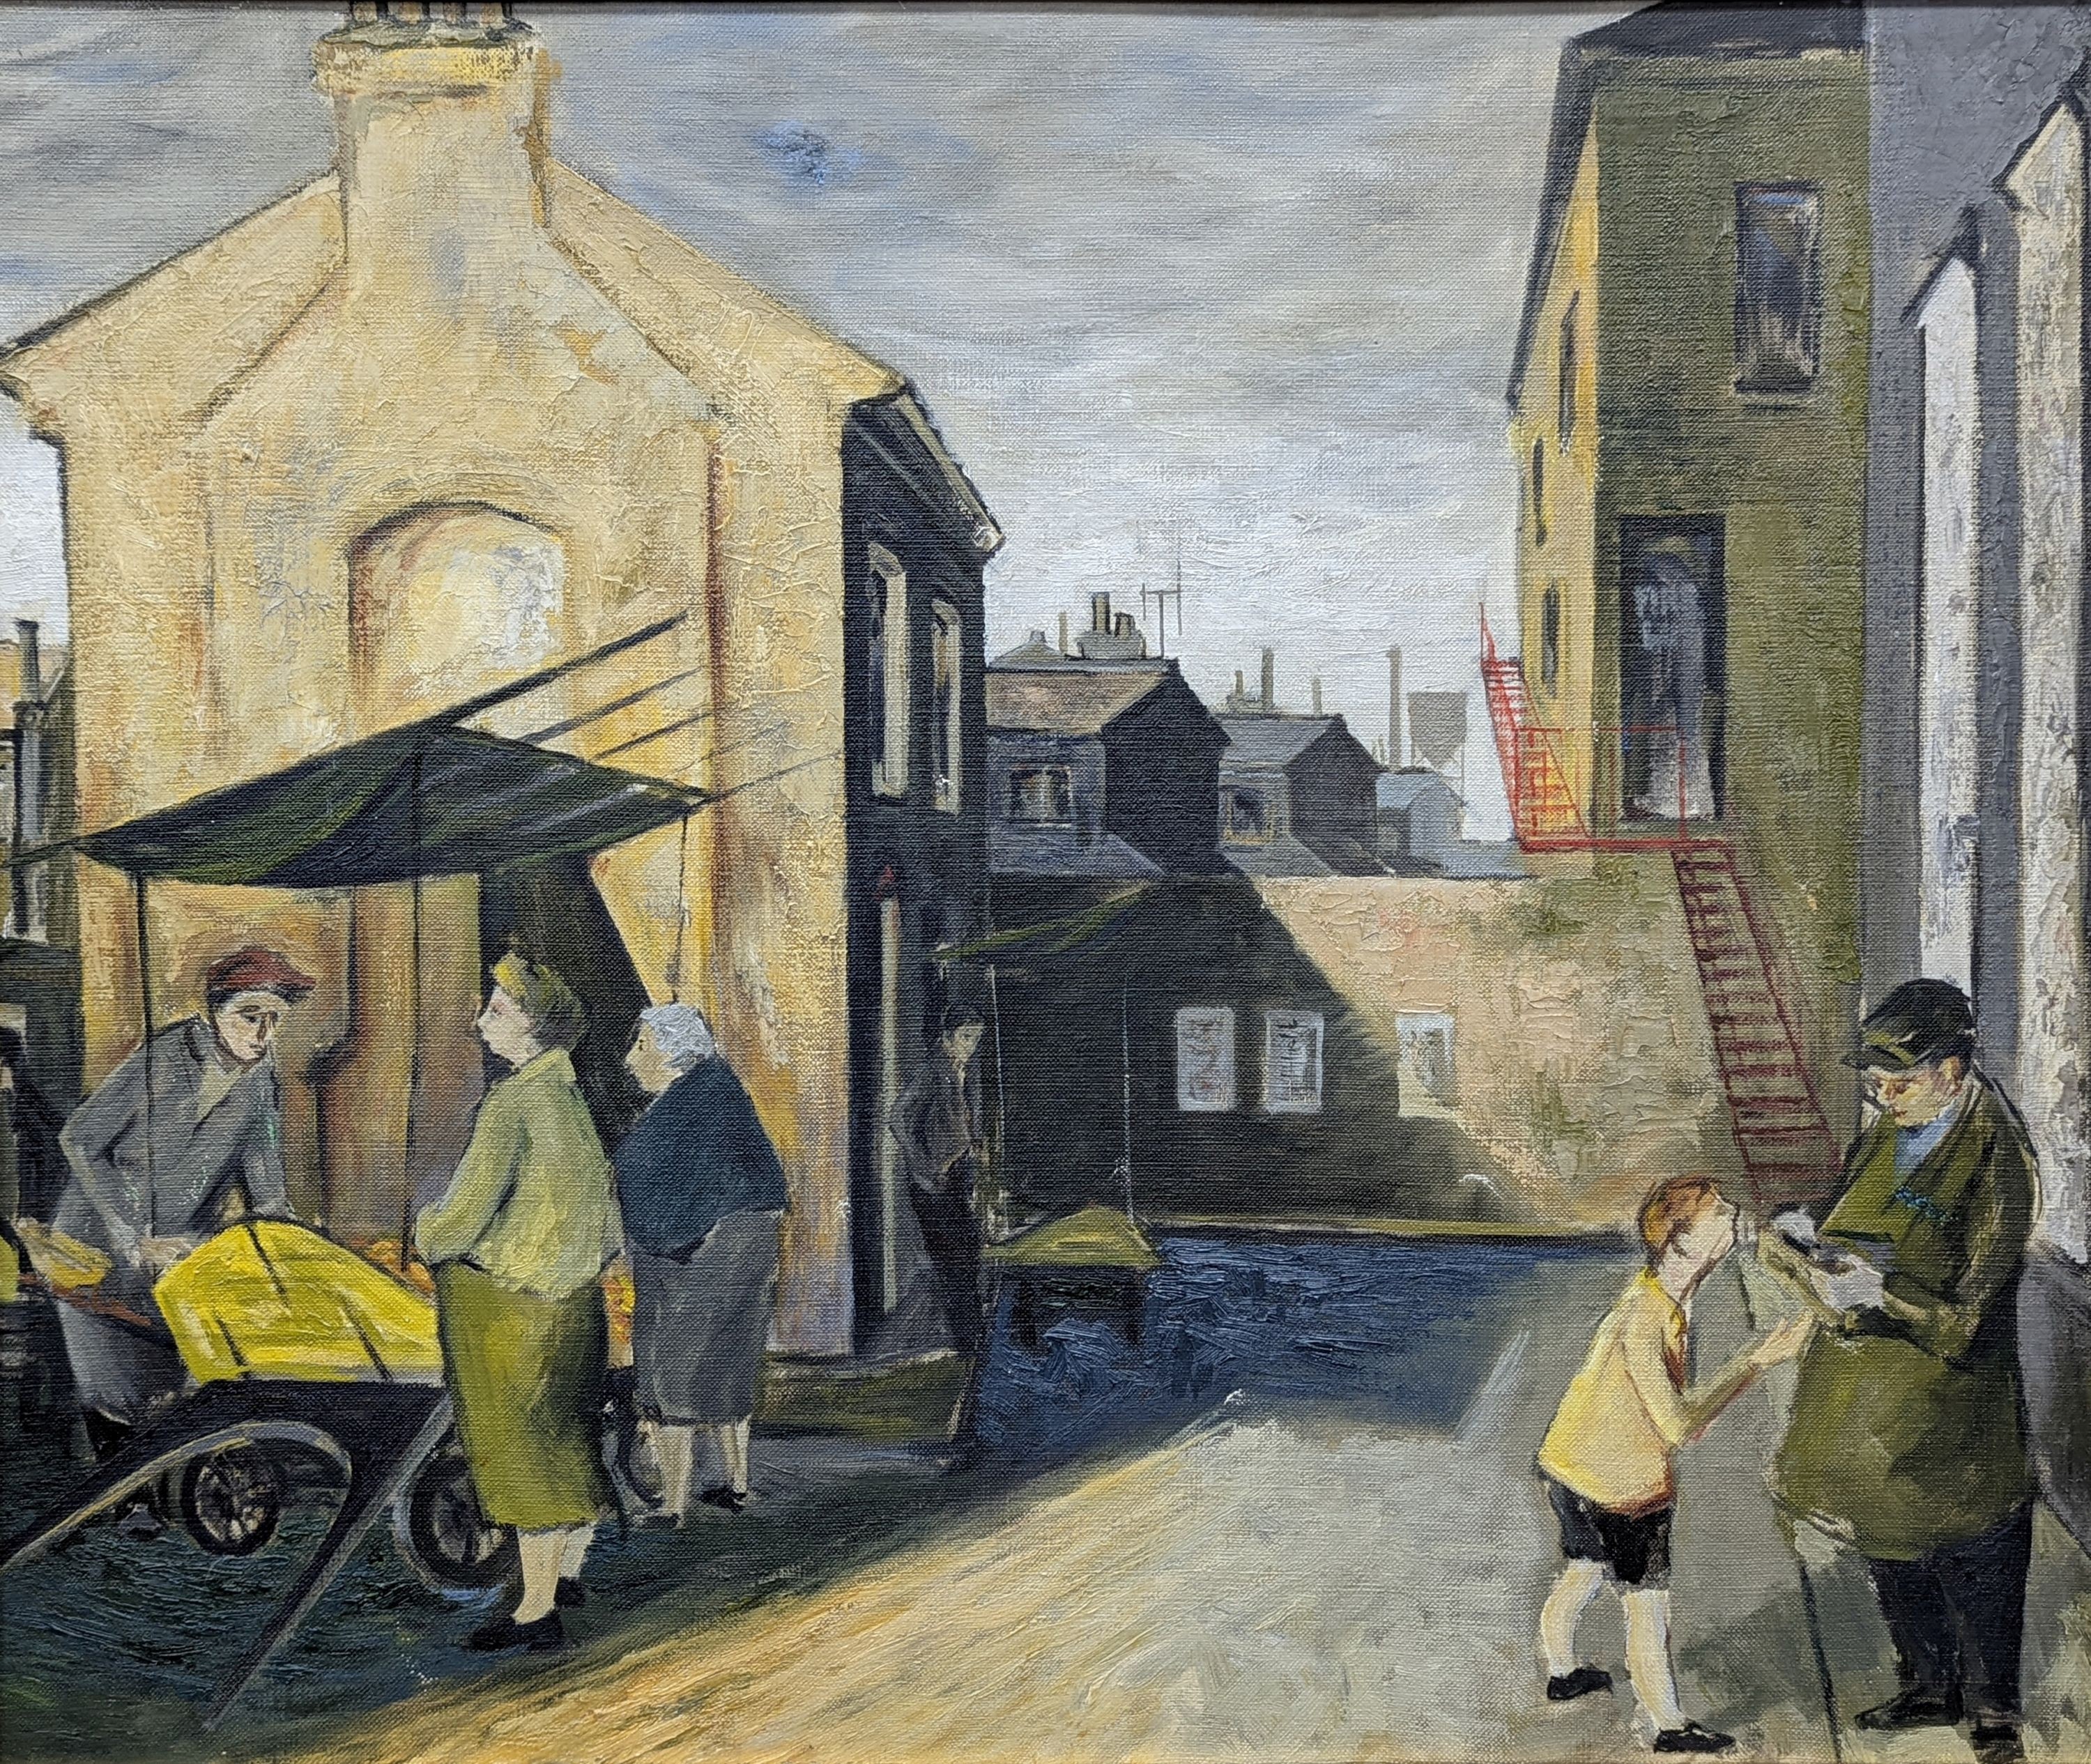 Modern British, oil on canvas board, Street scene, Exhibition label verso, 66 x 78cm